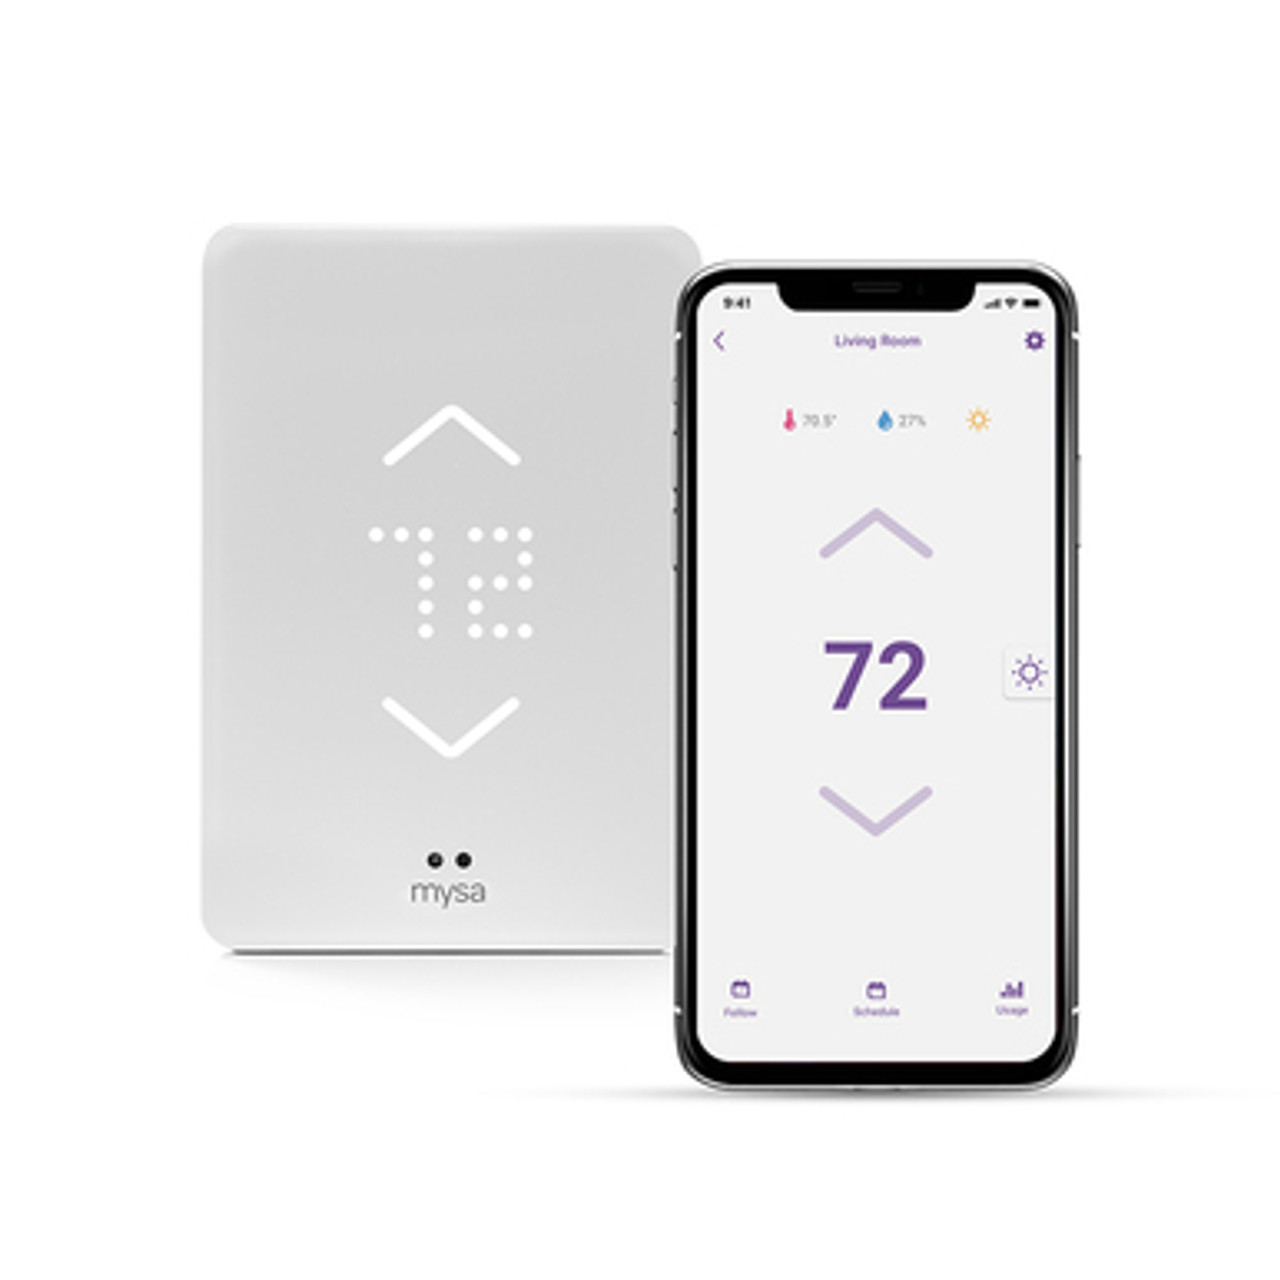 Mysa Smart Thermostat, V2.0 with app